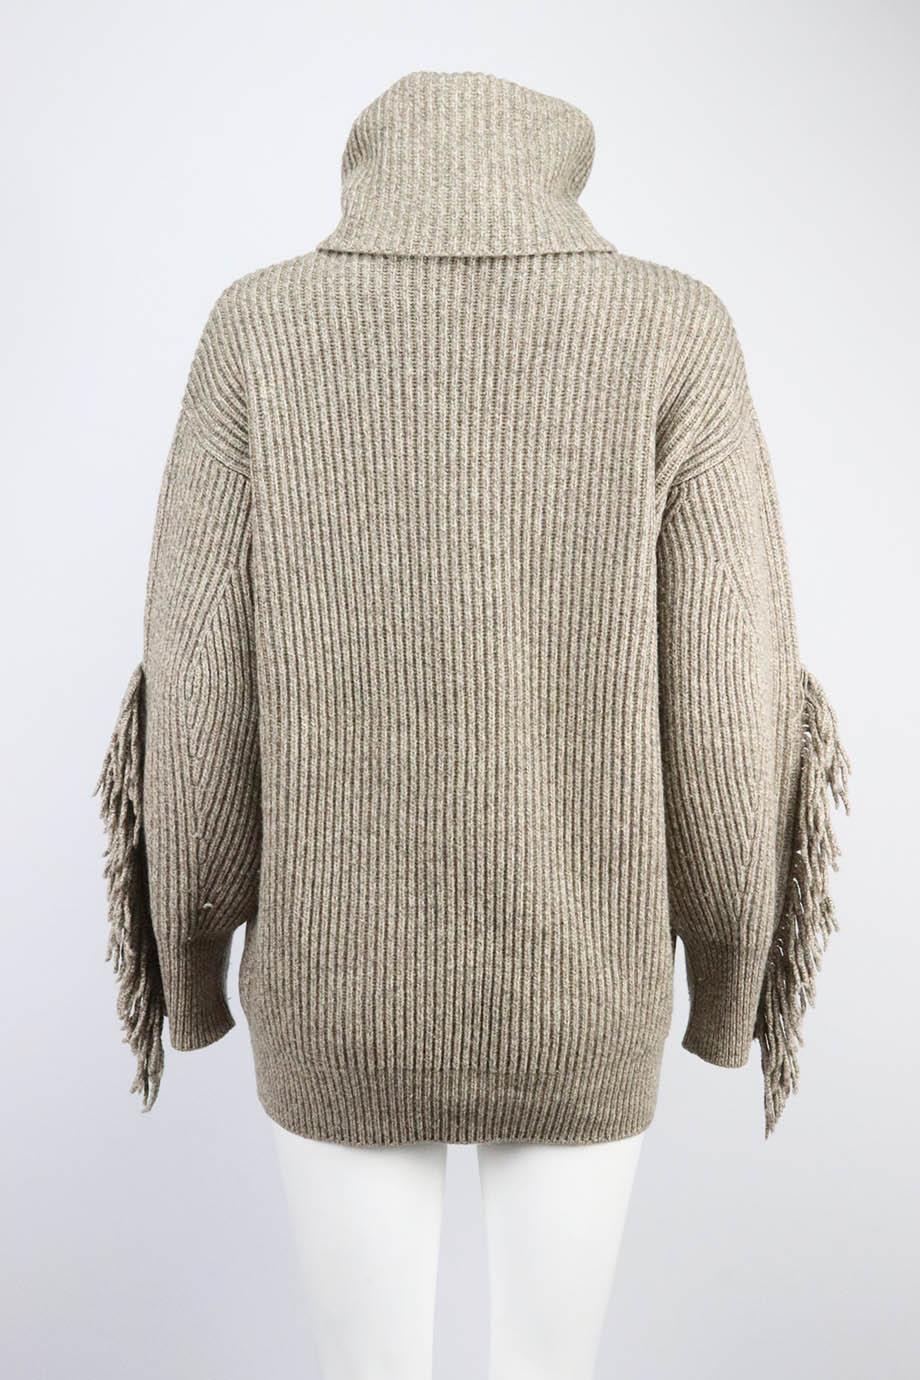 stella mccartney fringe sweater